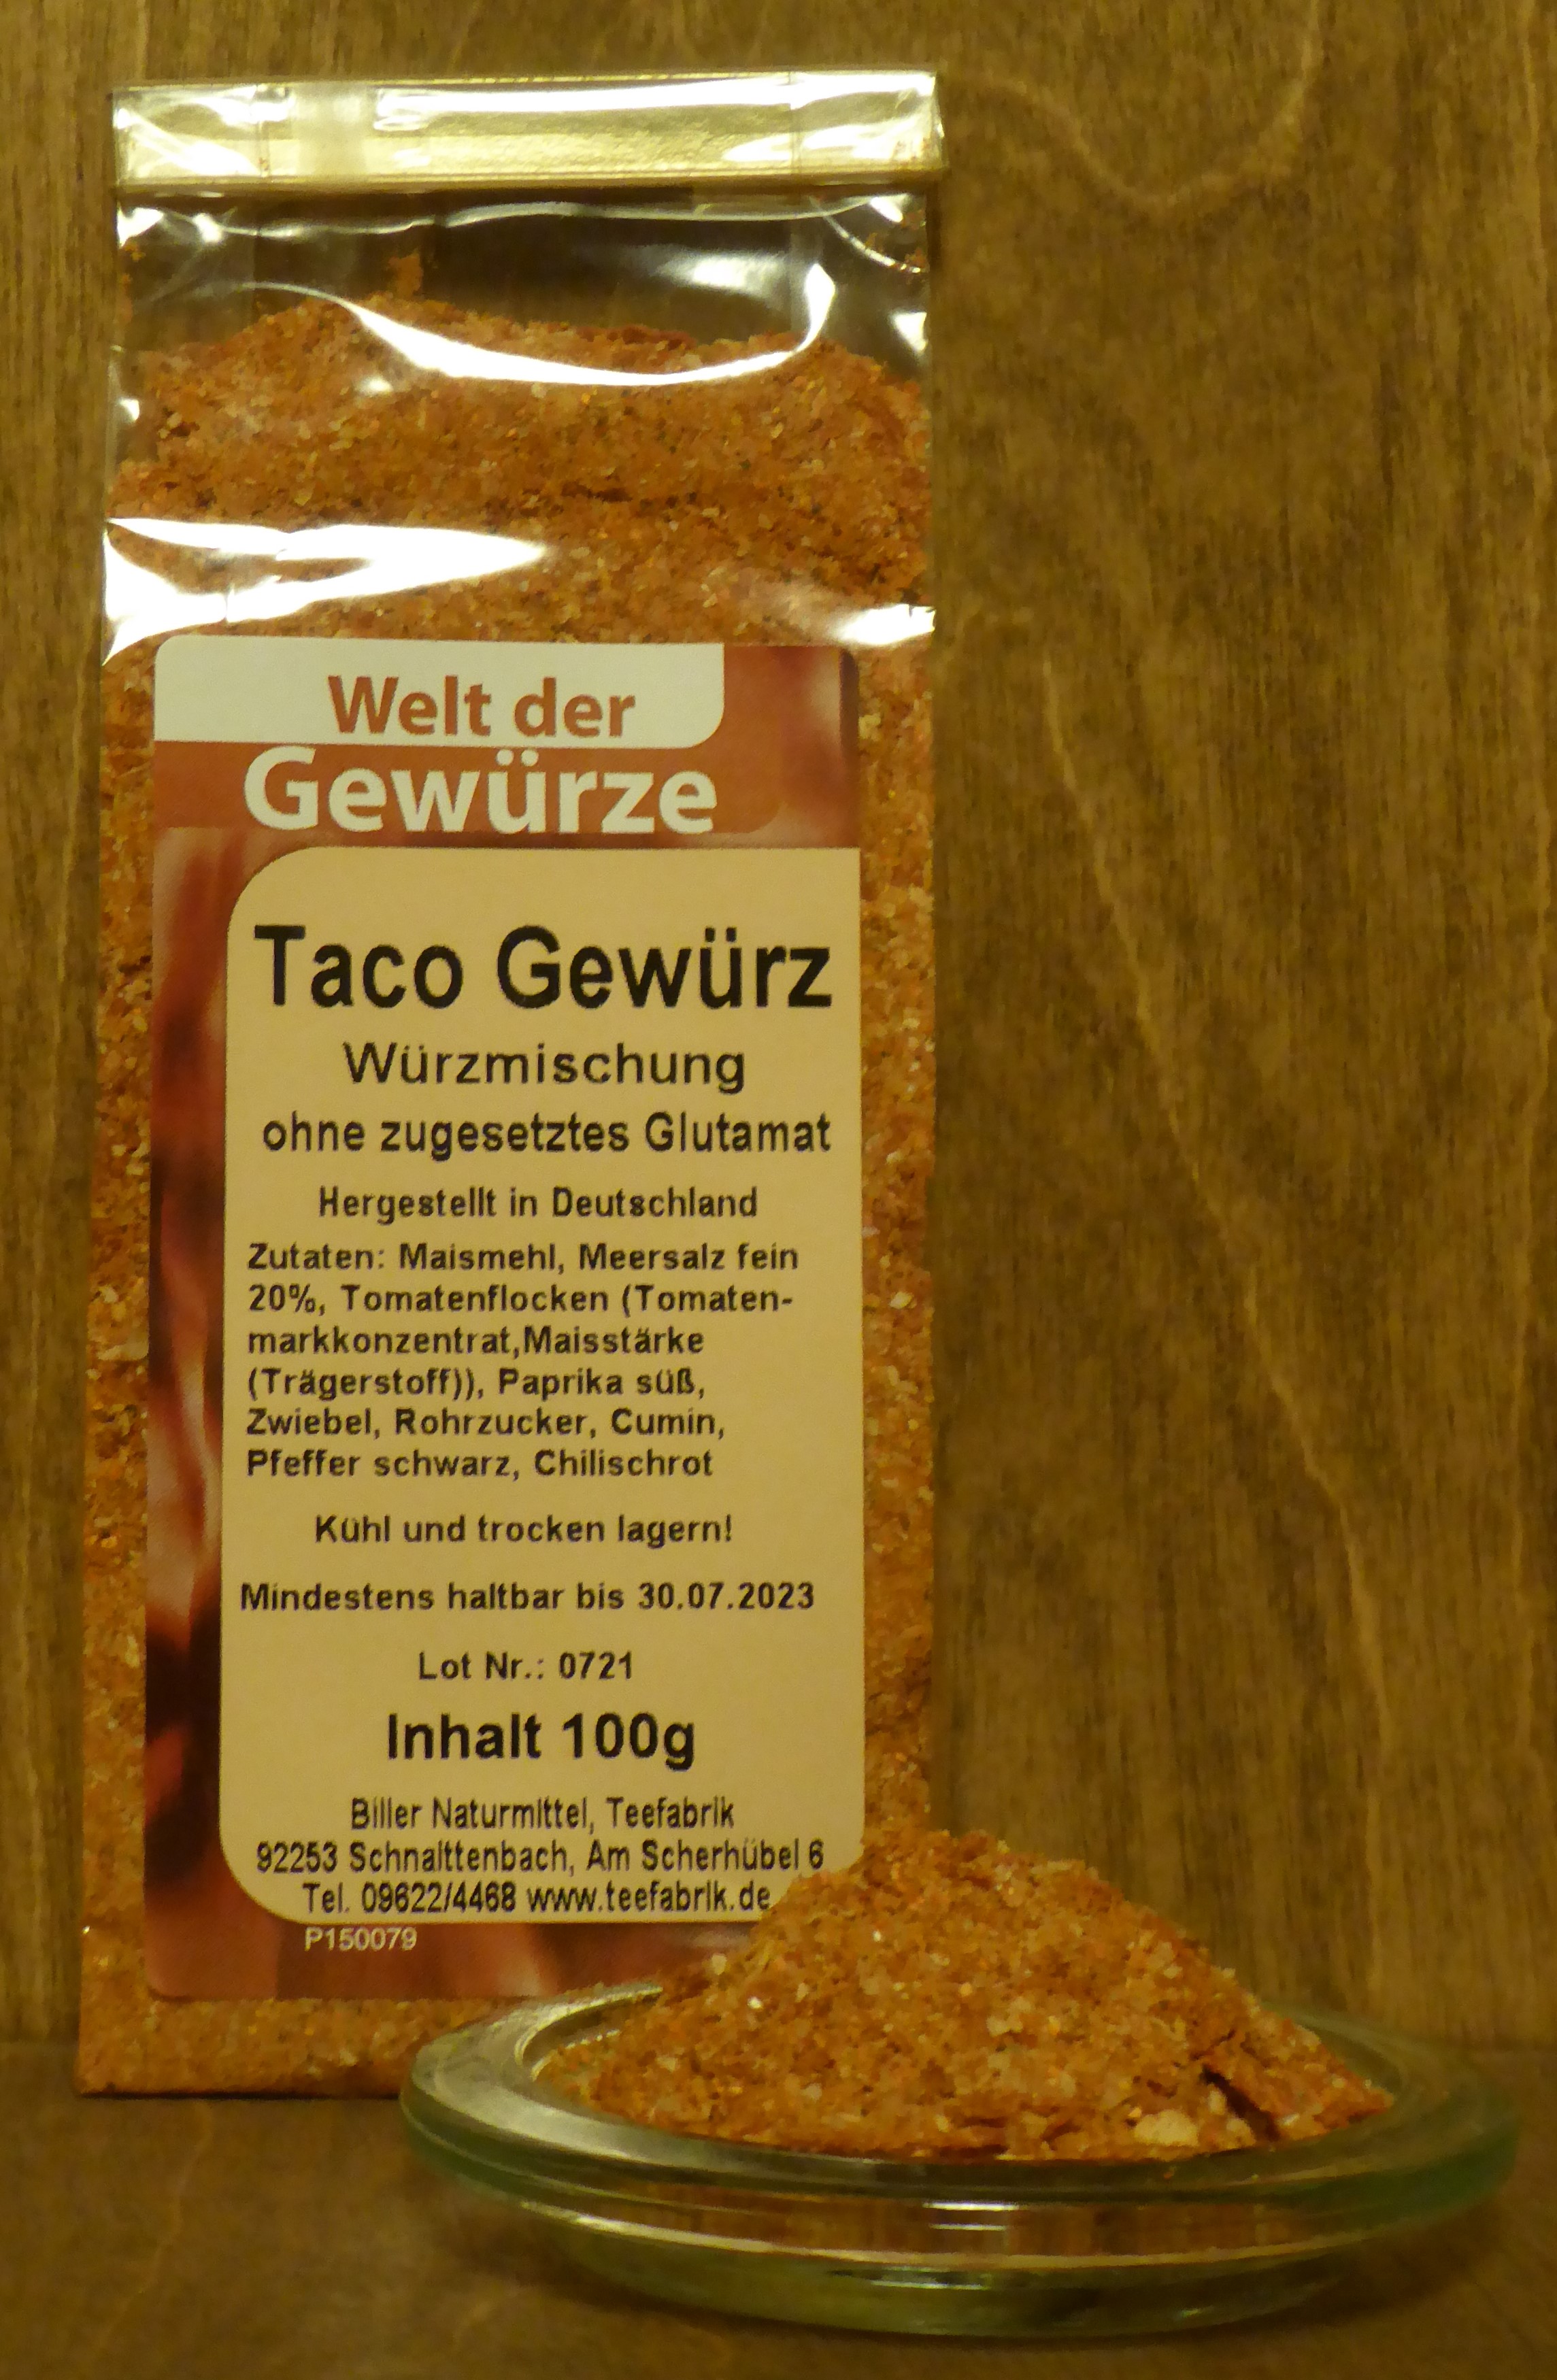 Taco Gewürz - Biller Naturmittel